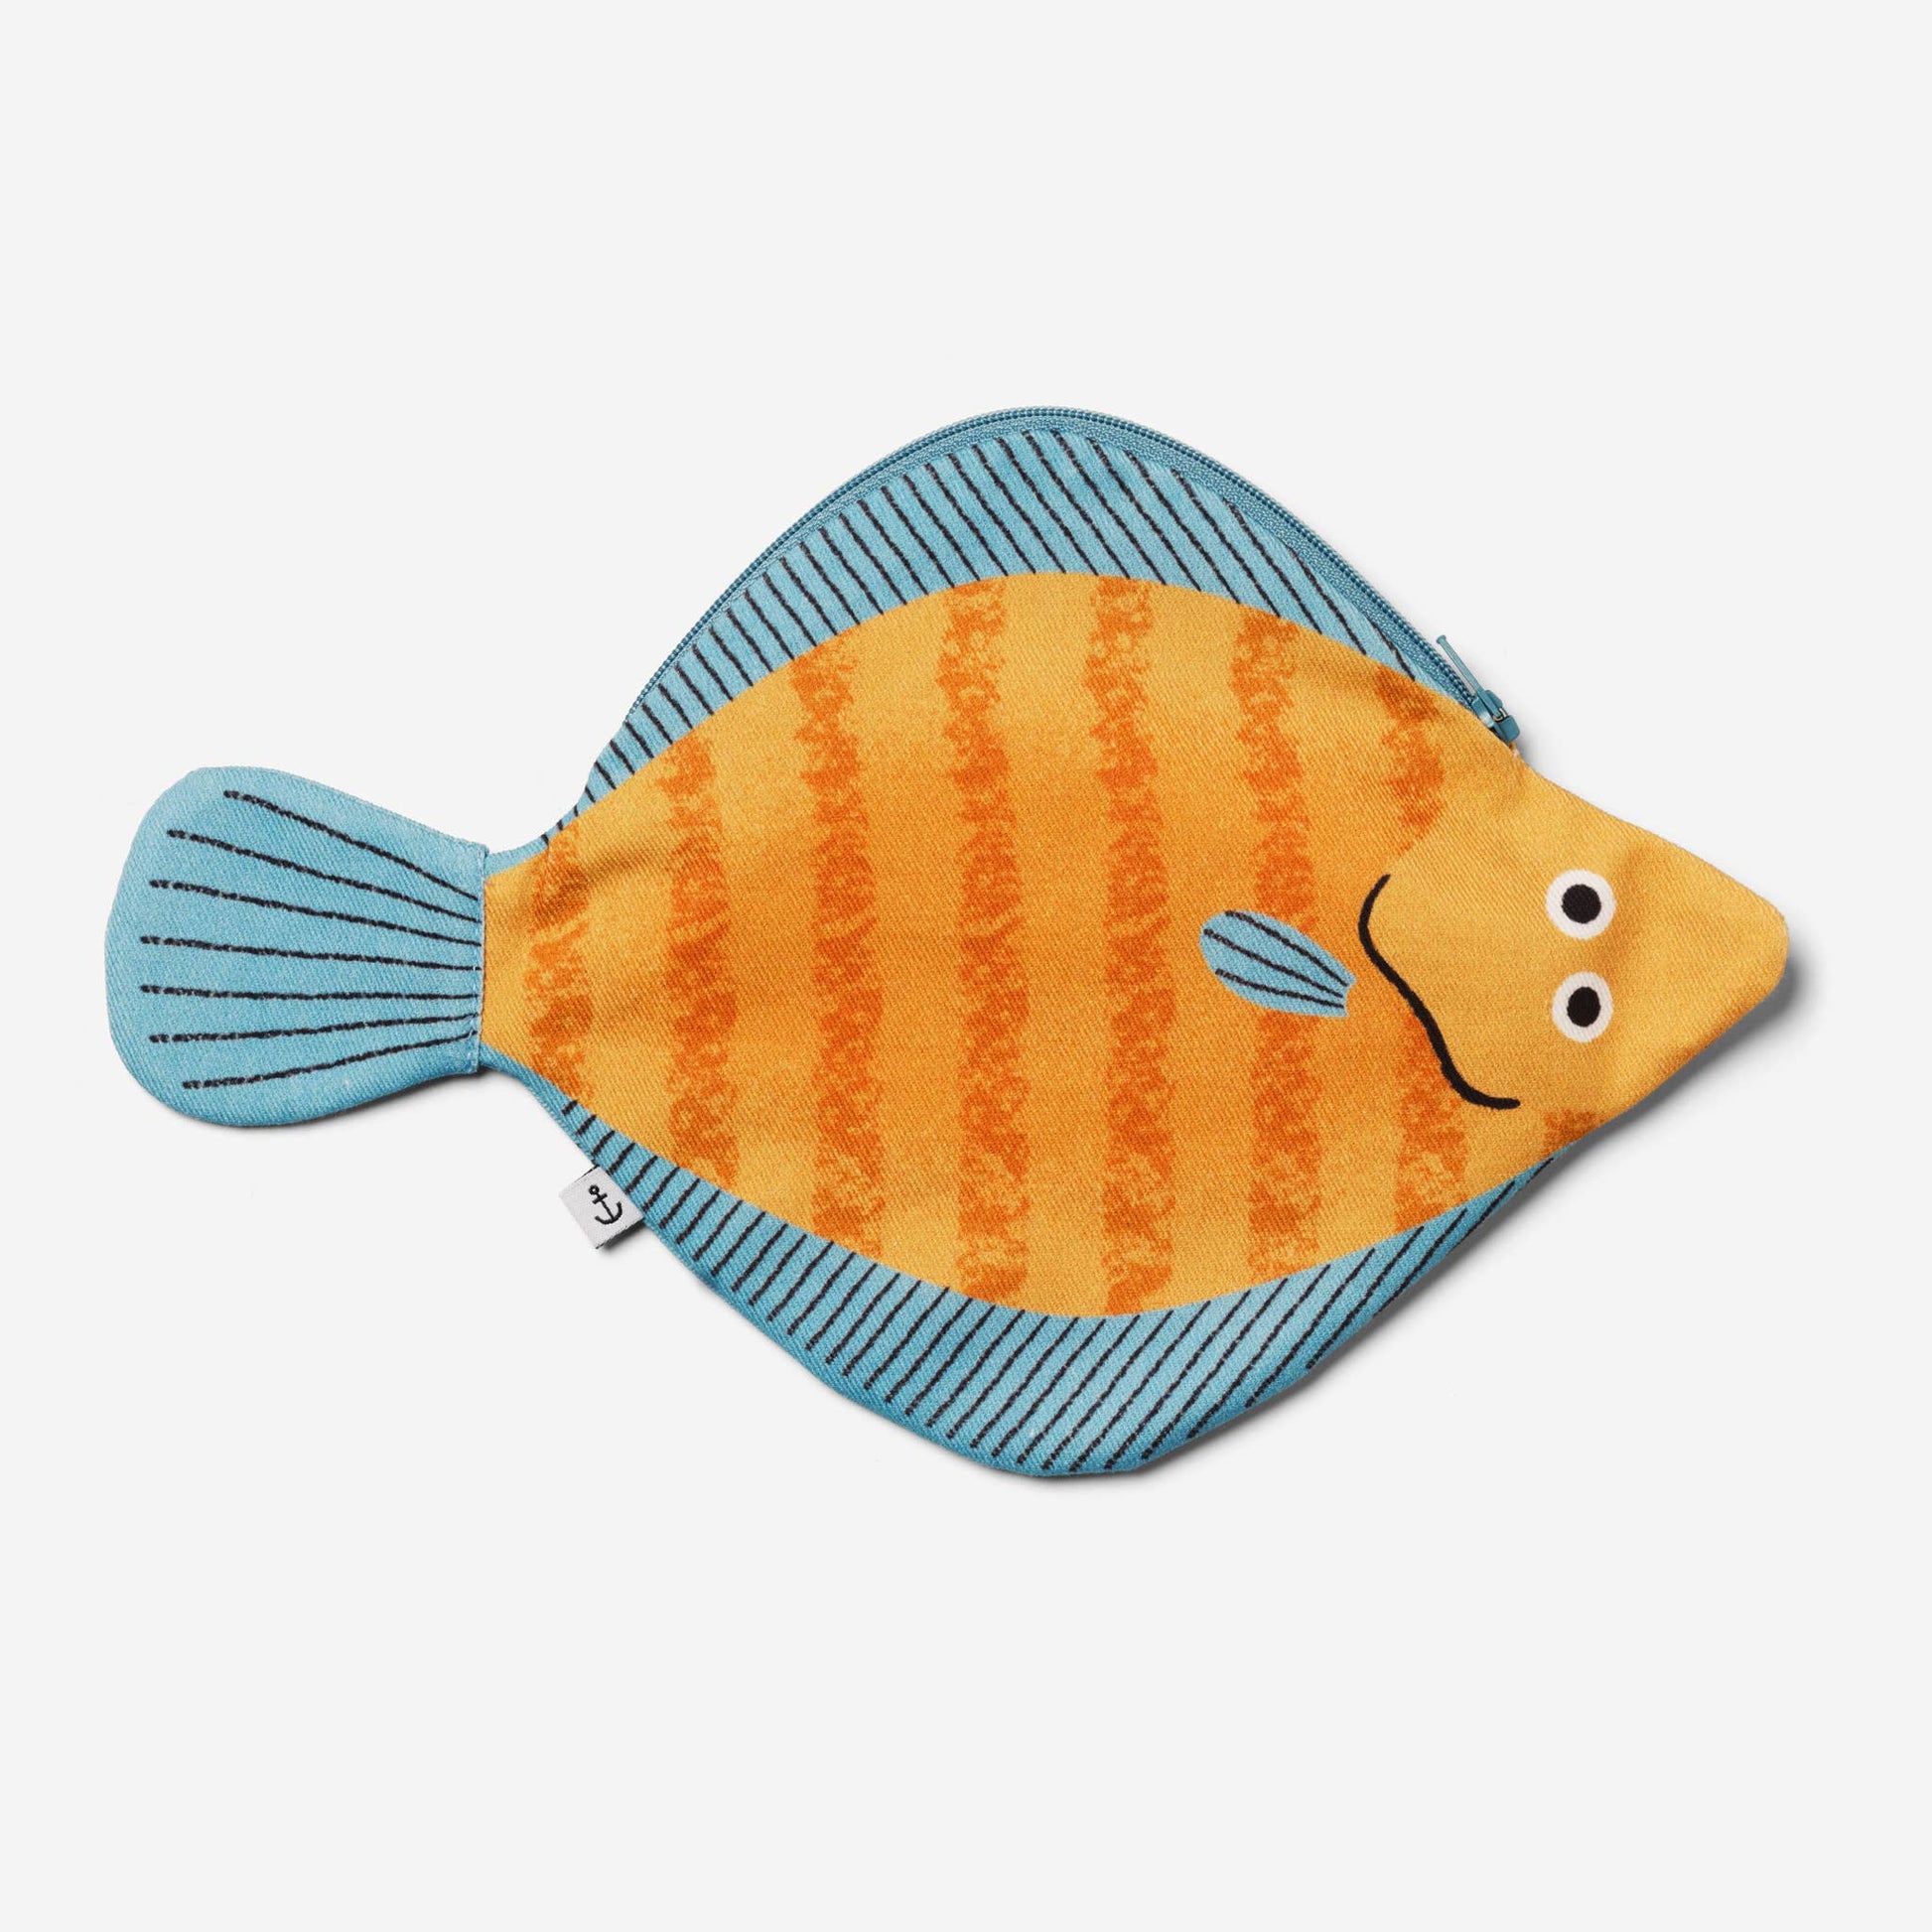 Plaice fish pouch. Fish is orange with dark orange stripes and blue fins.